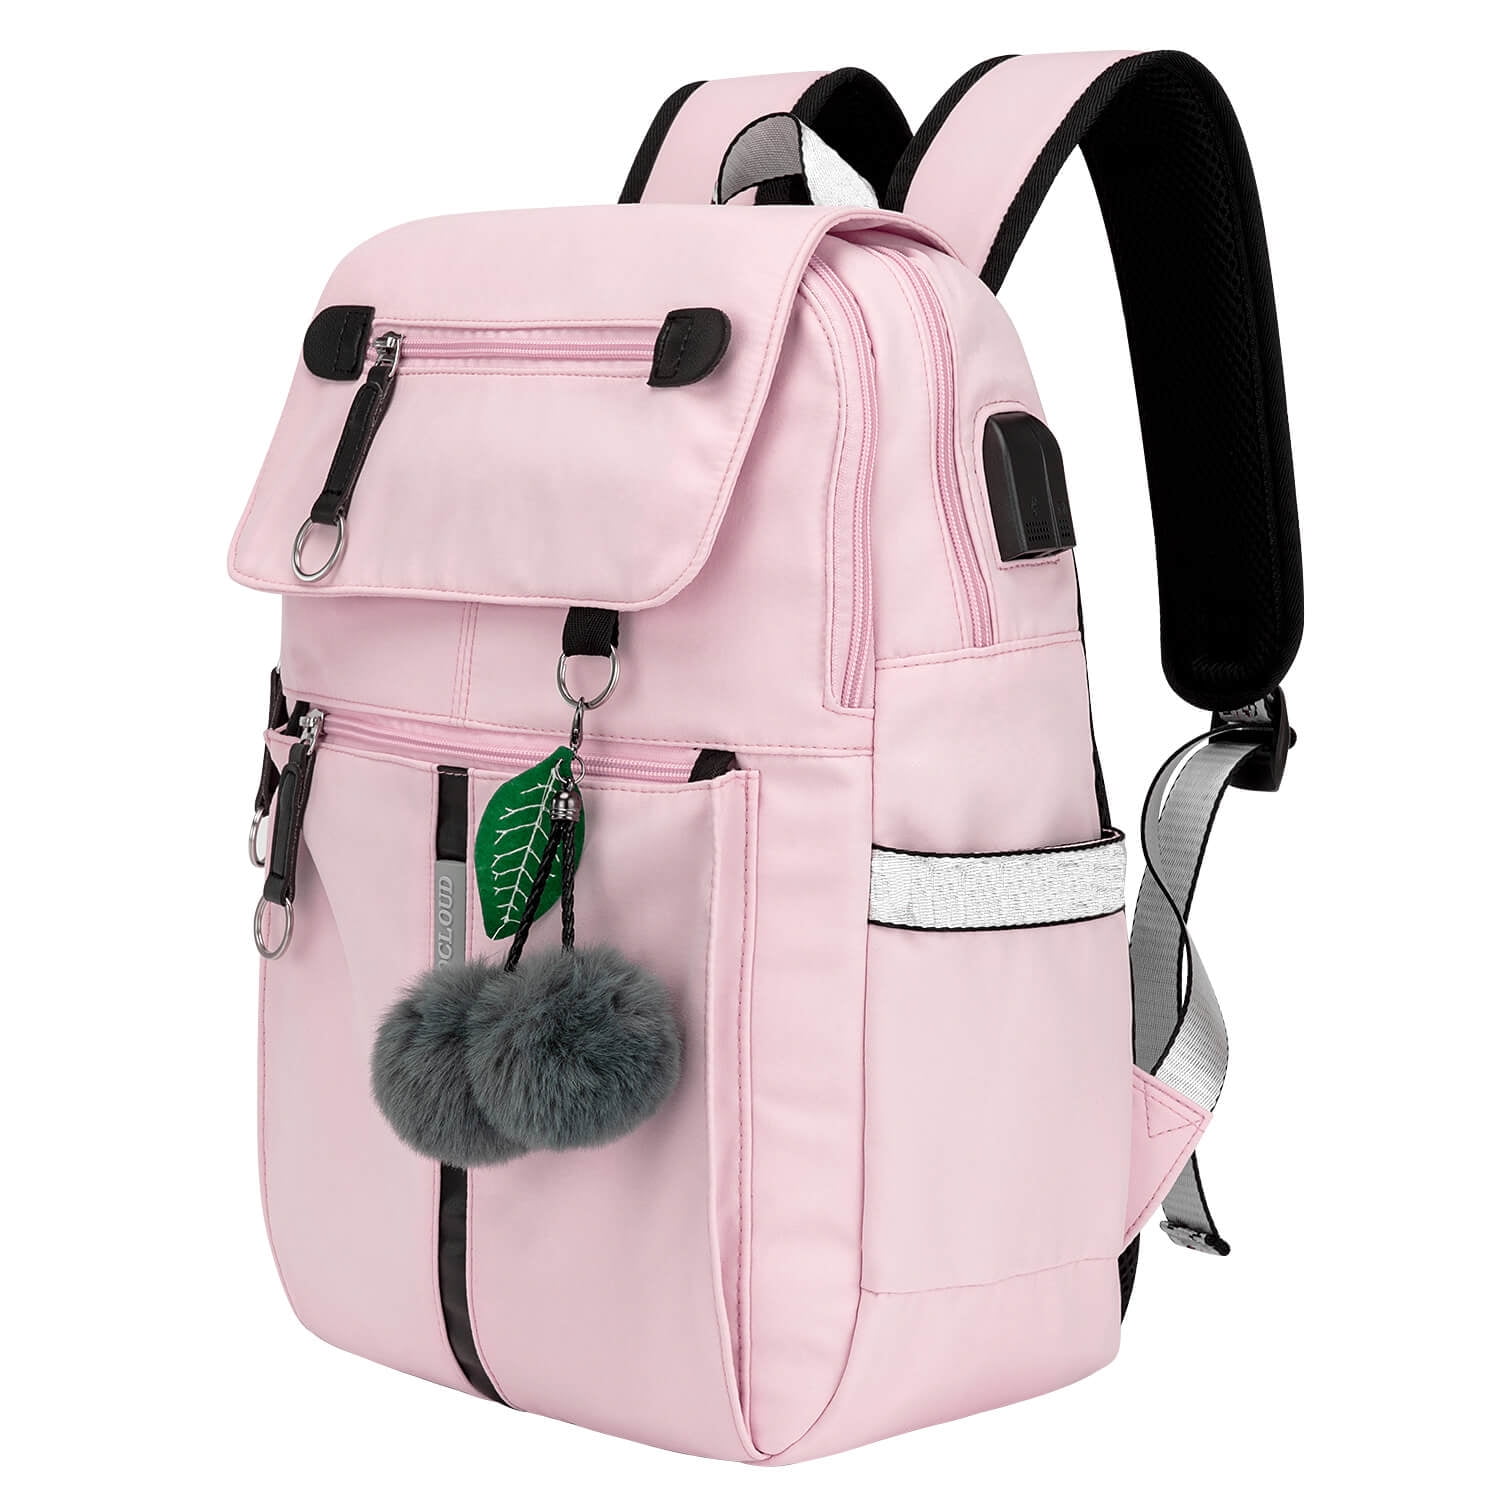 Drawstring Bag Dangerous Shark Lightweight Daypack for Teens Boys Girls with Zipper Mesh Pockets